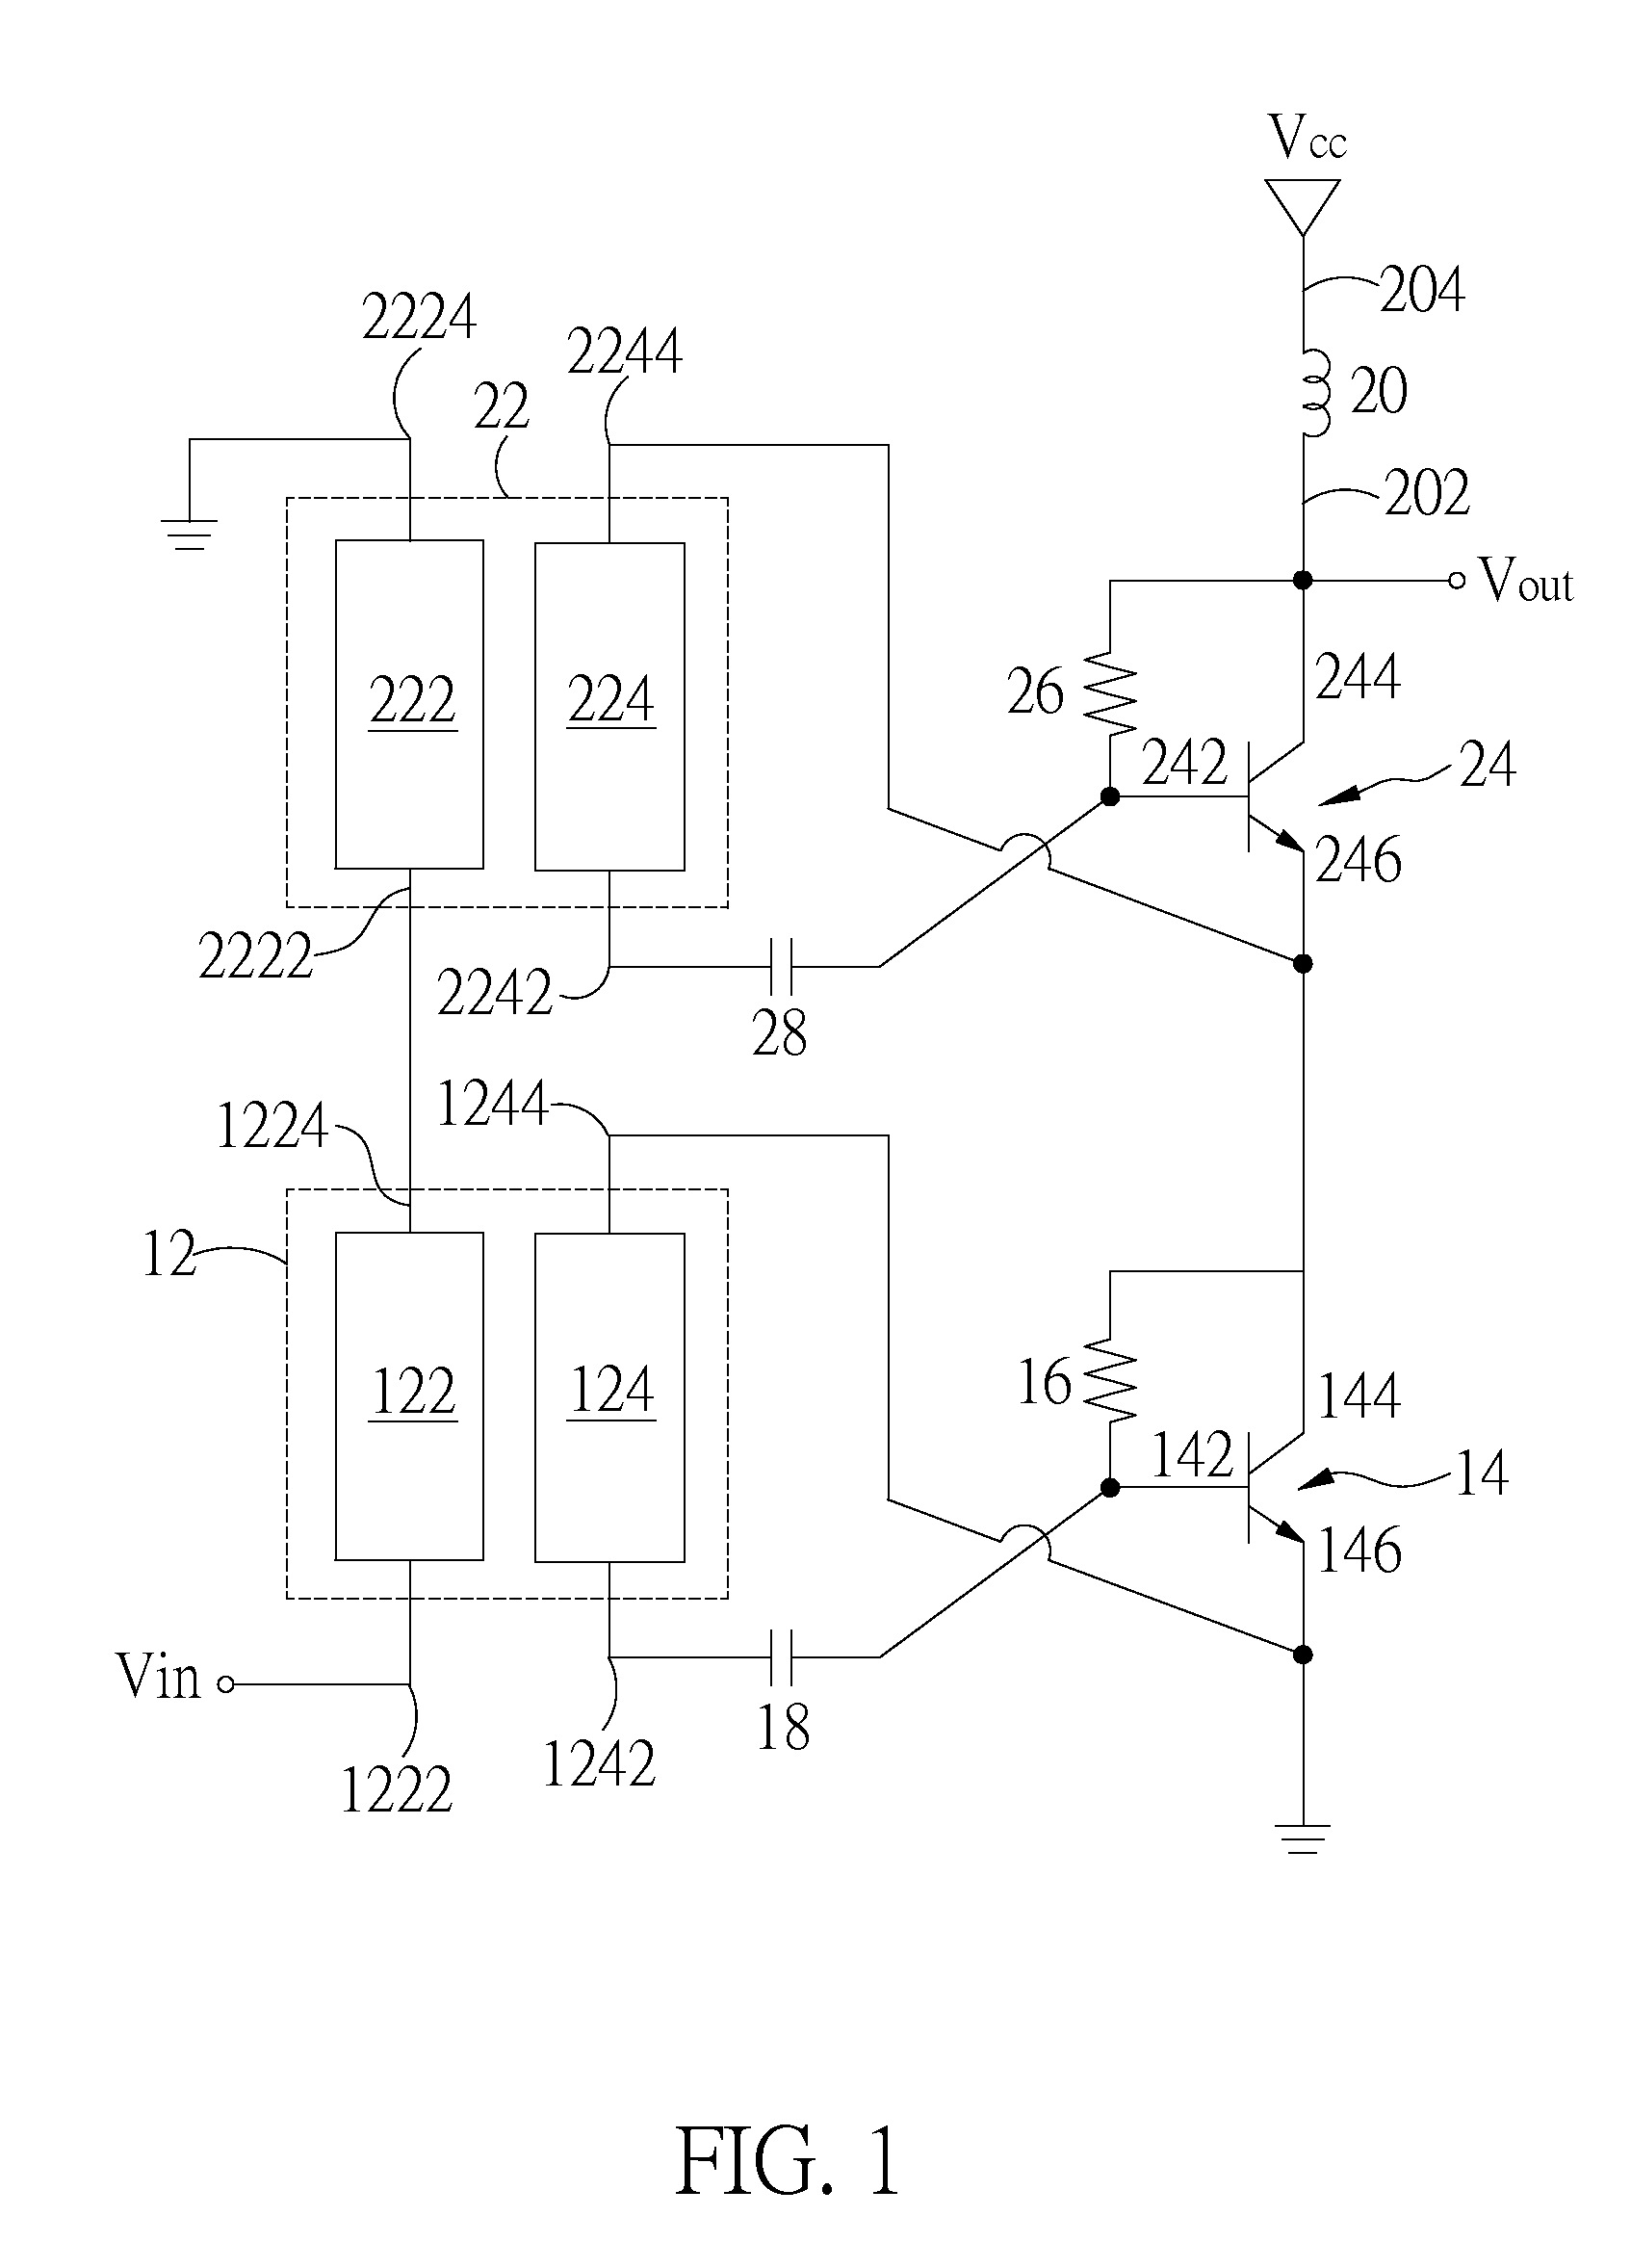 Power amplifier having input ends combined in series and output ends combined in series